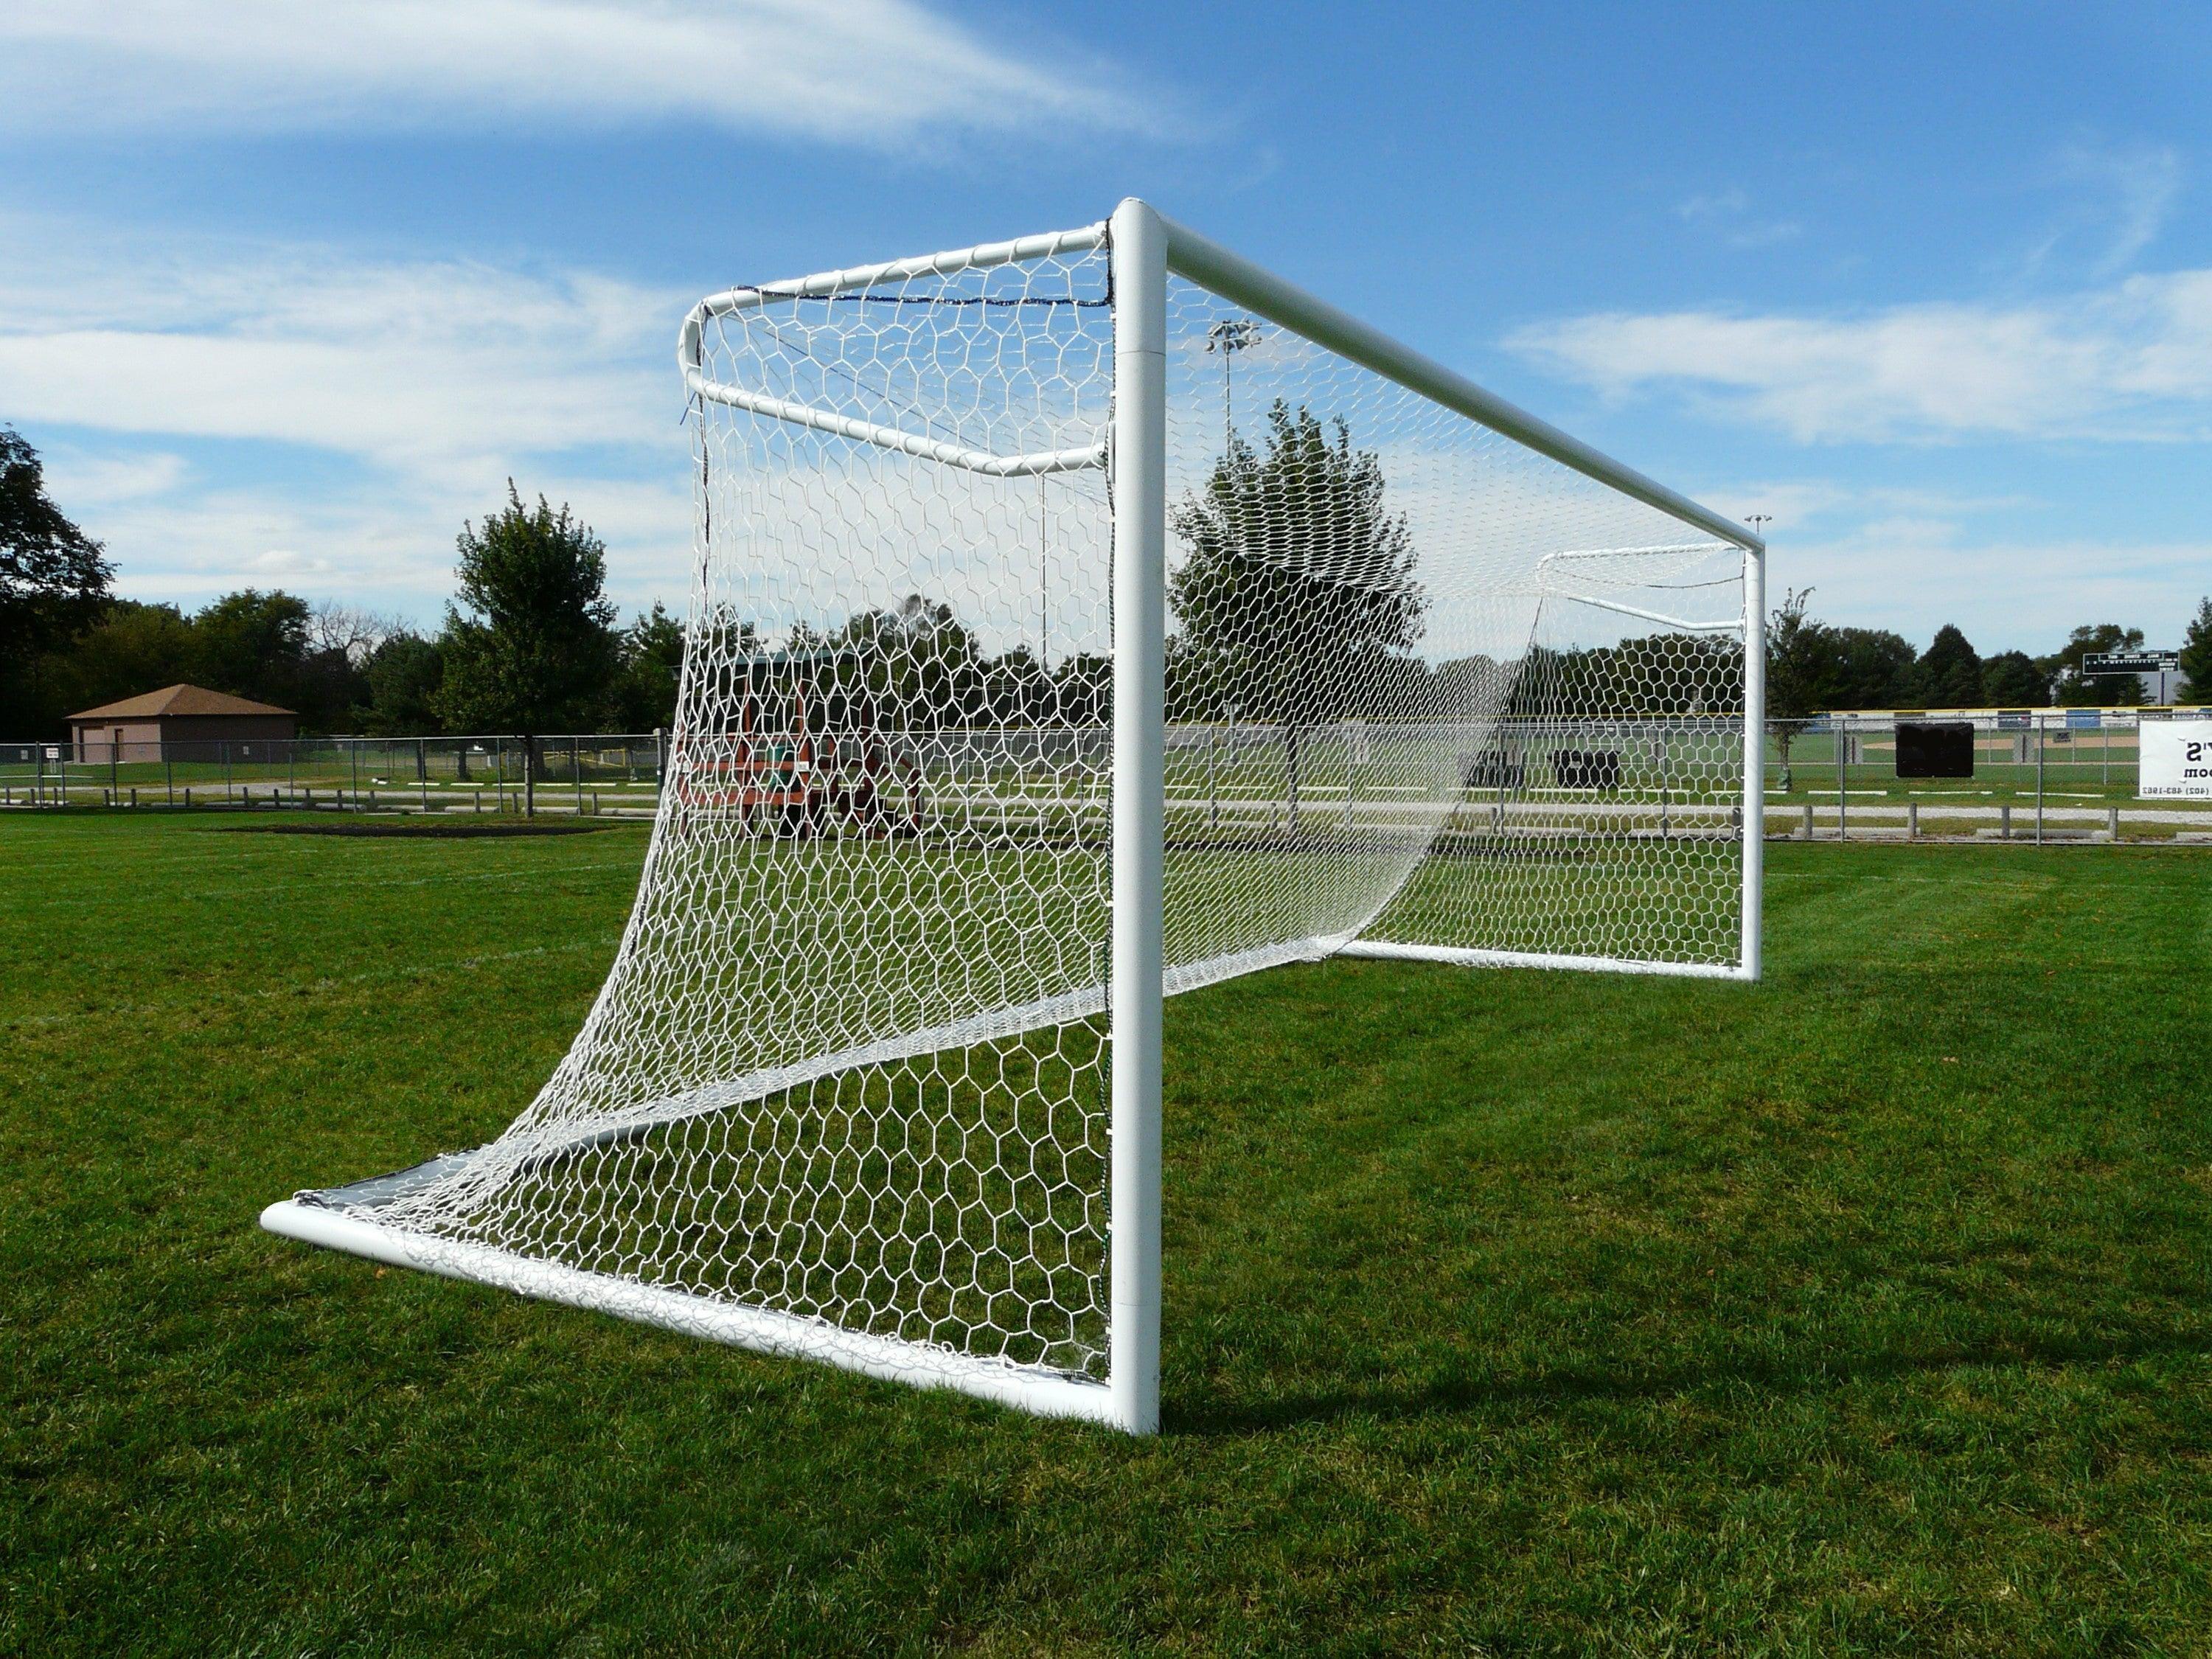 Euro portable futbol goal (official size) – bisoninc